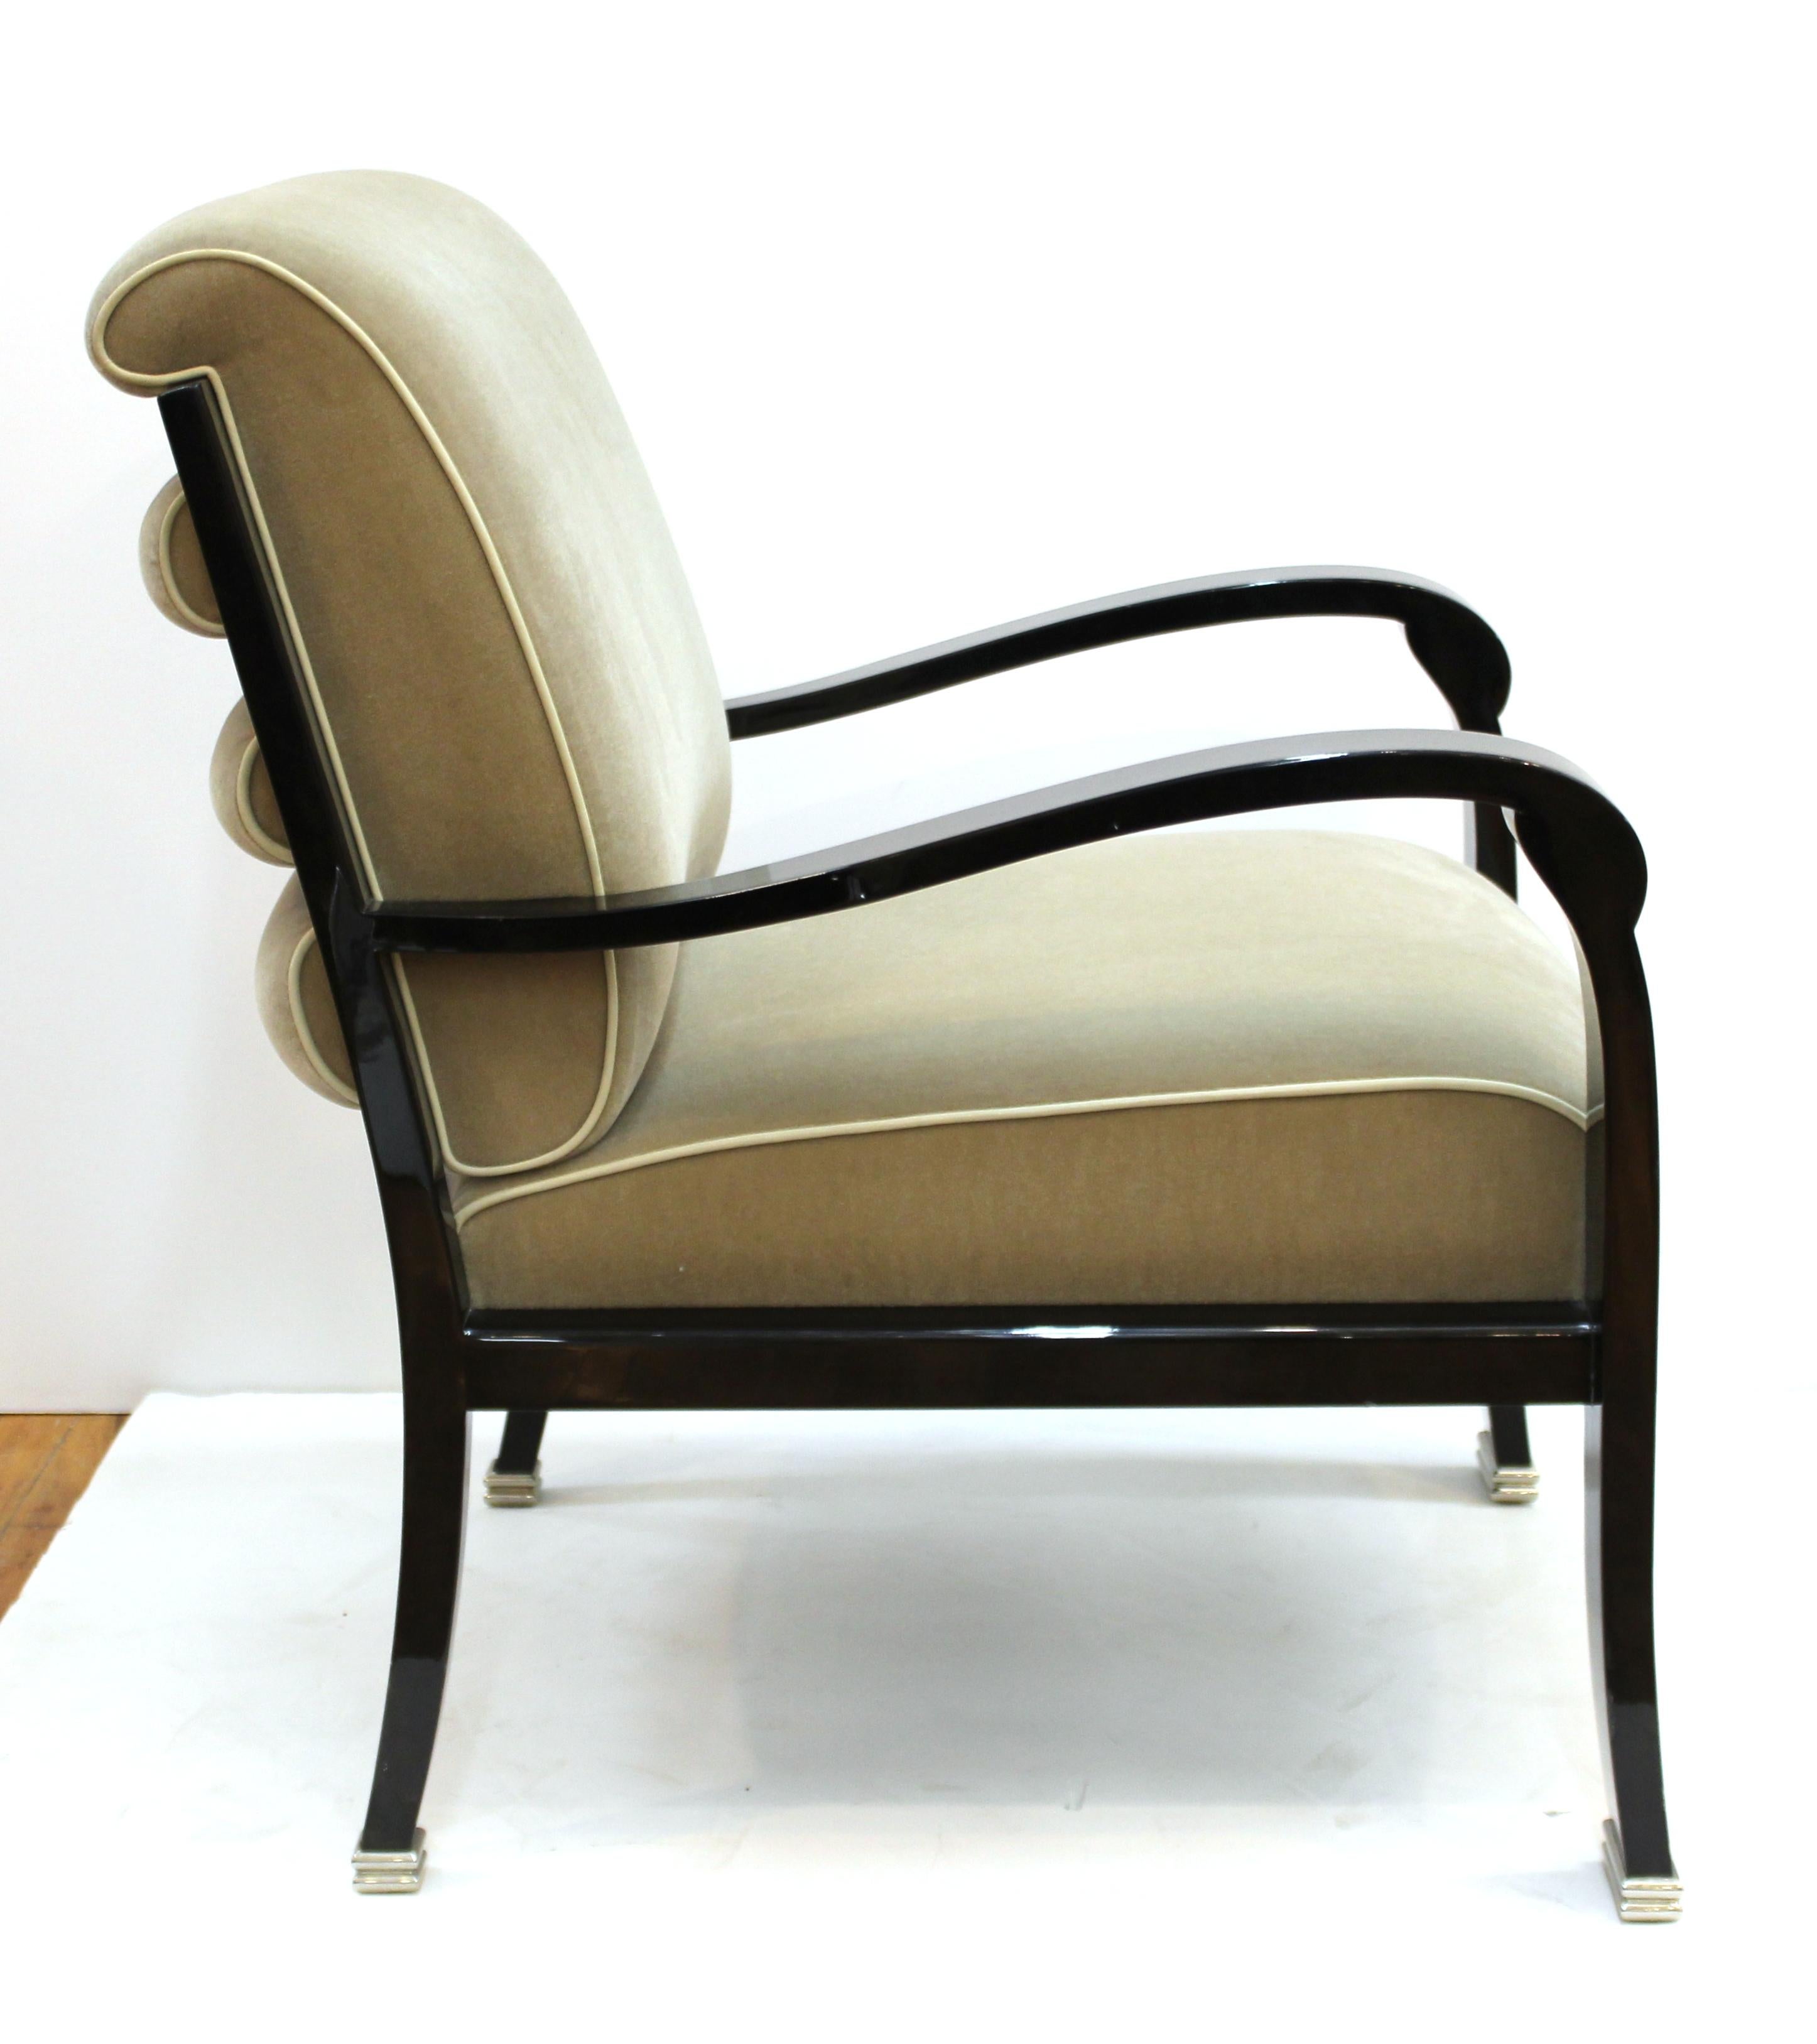 20th Century Sally Sirkin Lewis for J. Robert Scott Art Deco Revival Black Lacquer Armchair